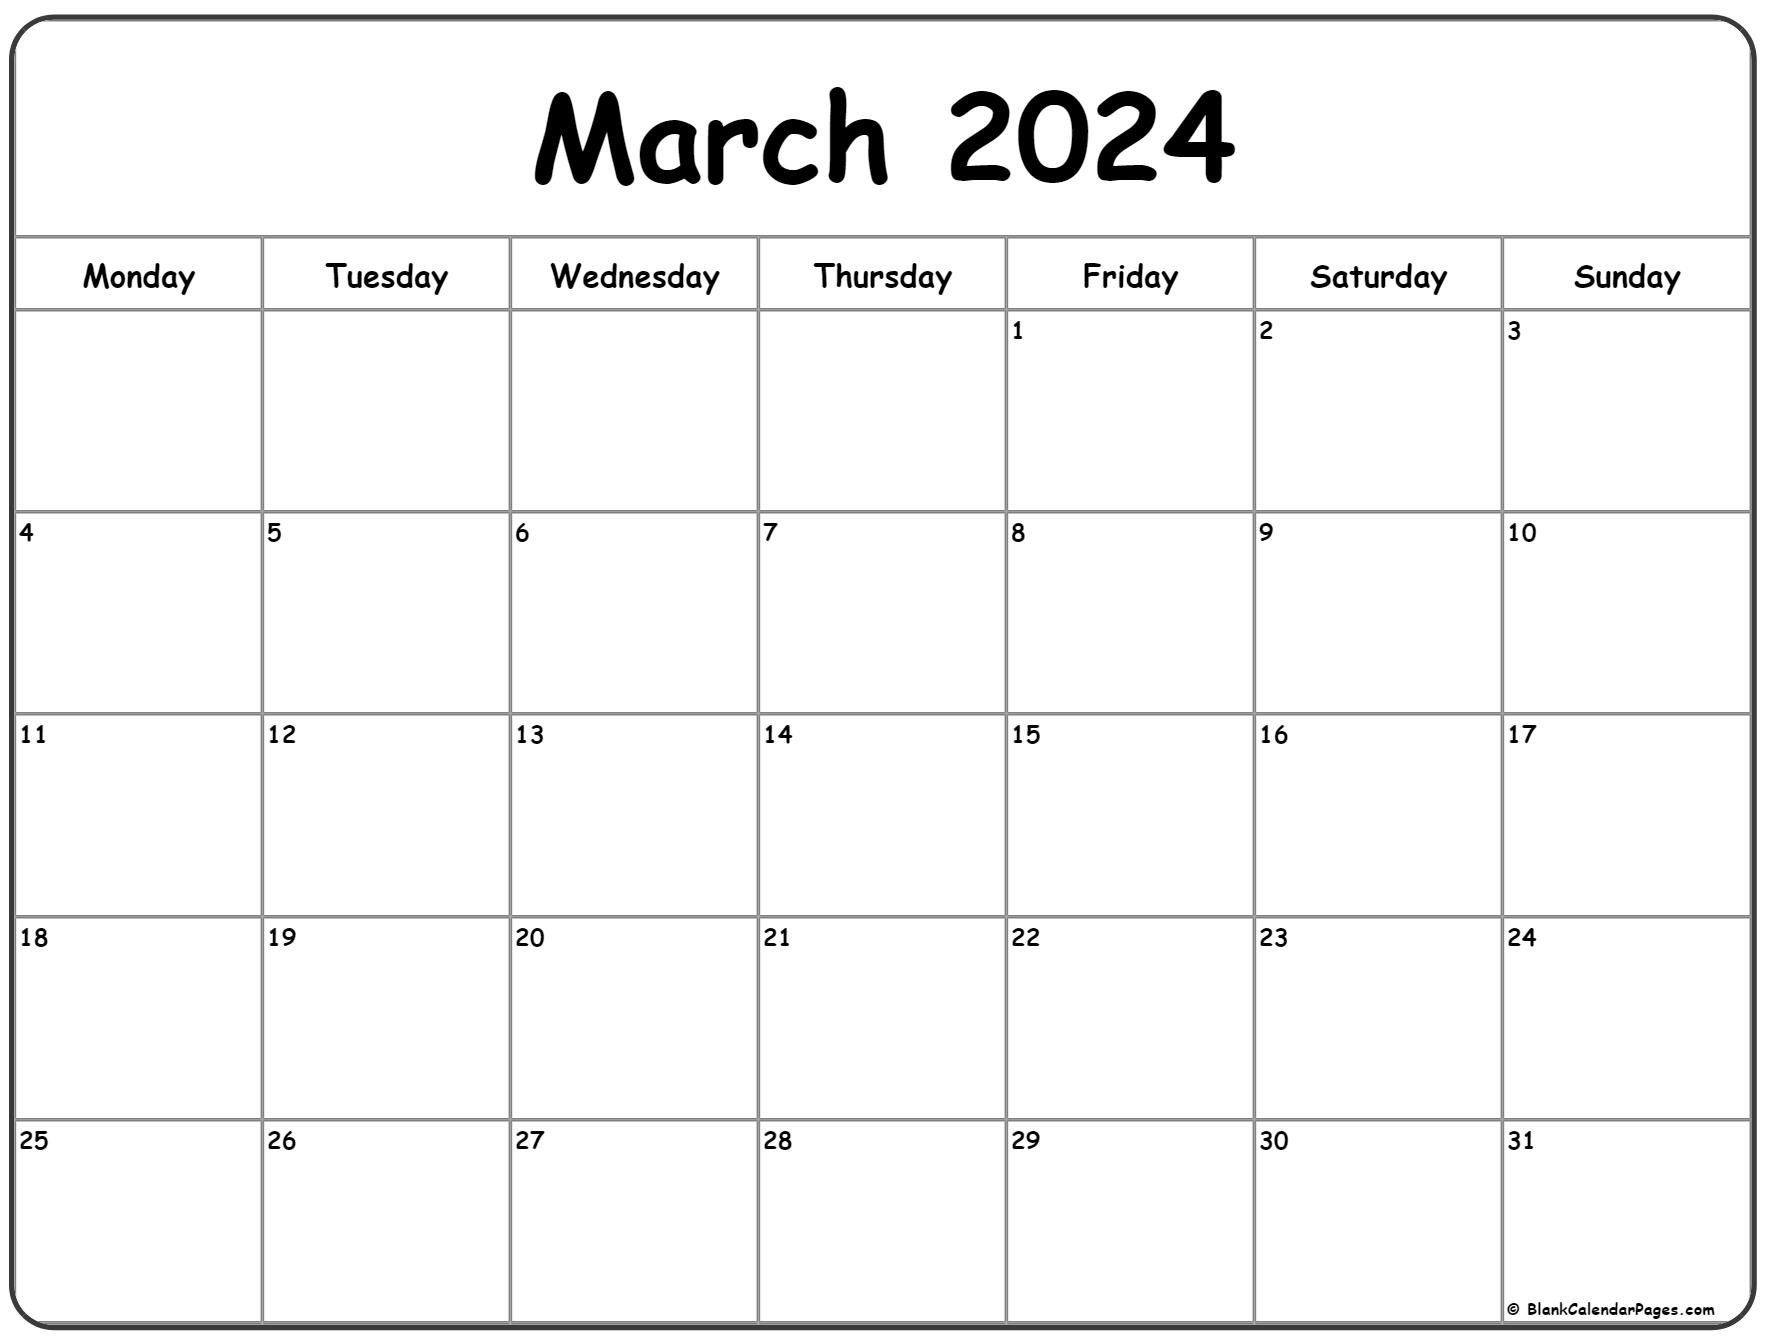 March 2024 Monday Calendar | Monday To Sunday for Printable Calendar March 2024